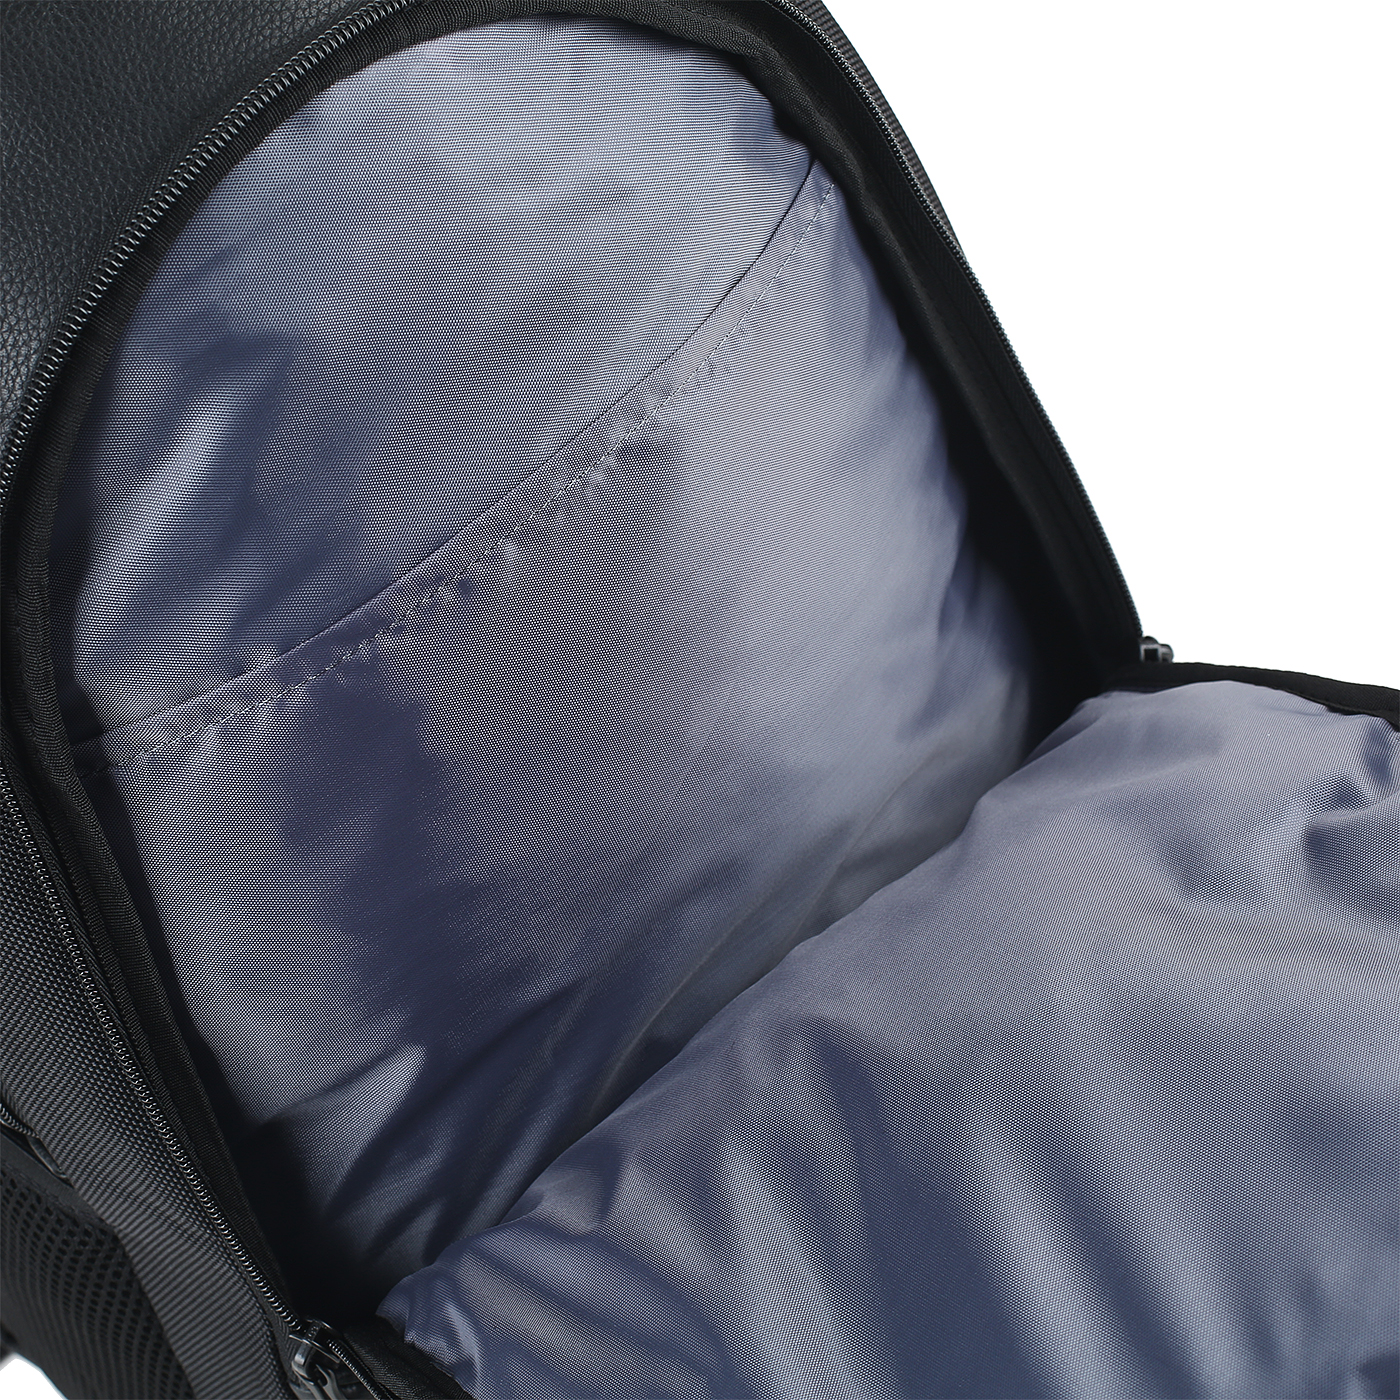 Городской рюкзак Wenger Ibex Leather